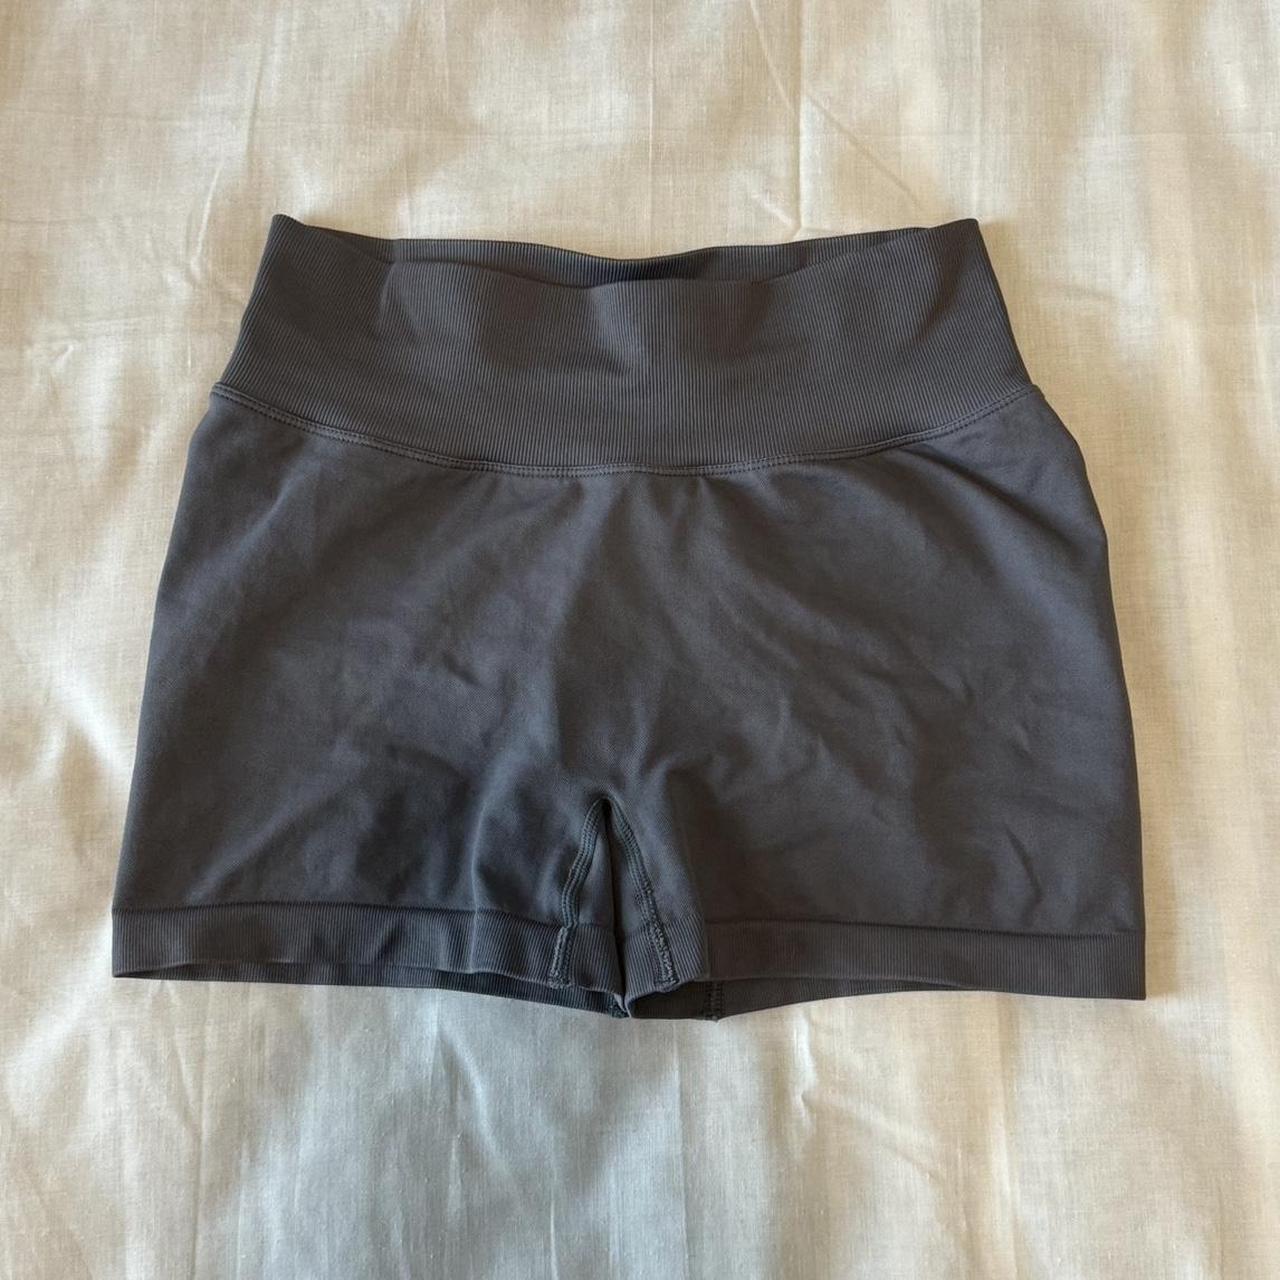 aurola workout shorts in navy in great condition! - Depop